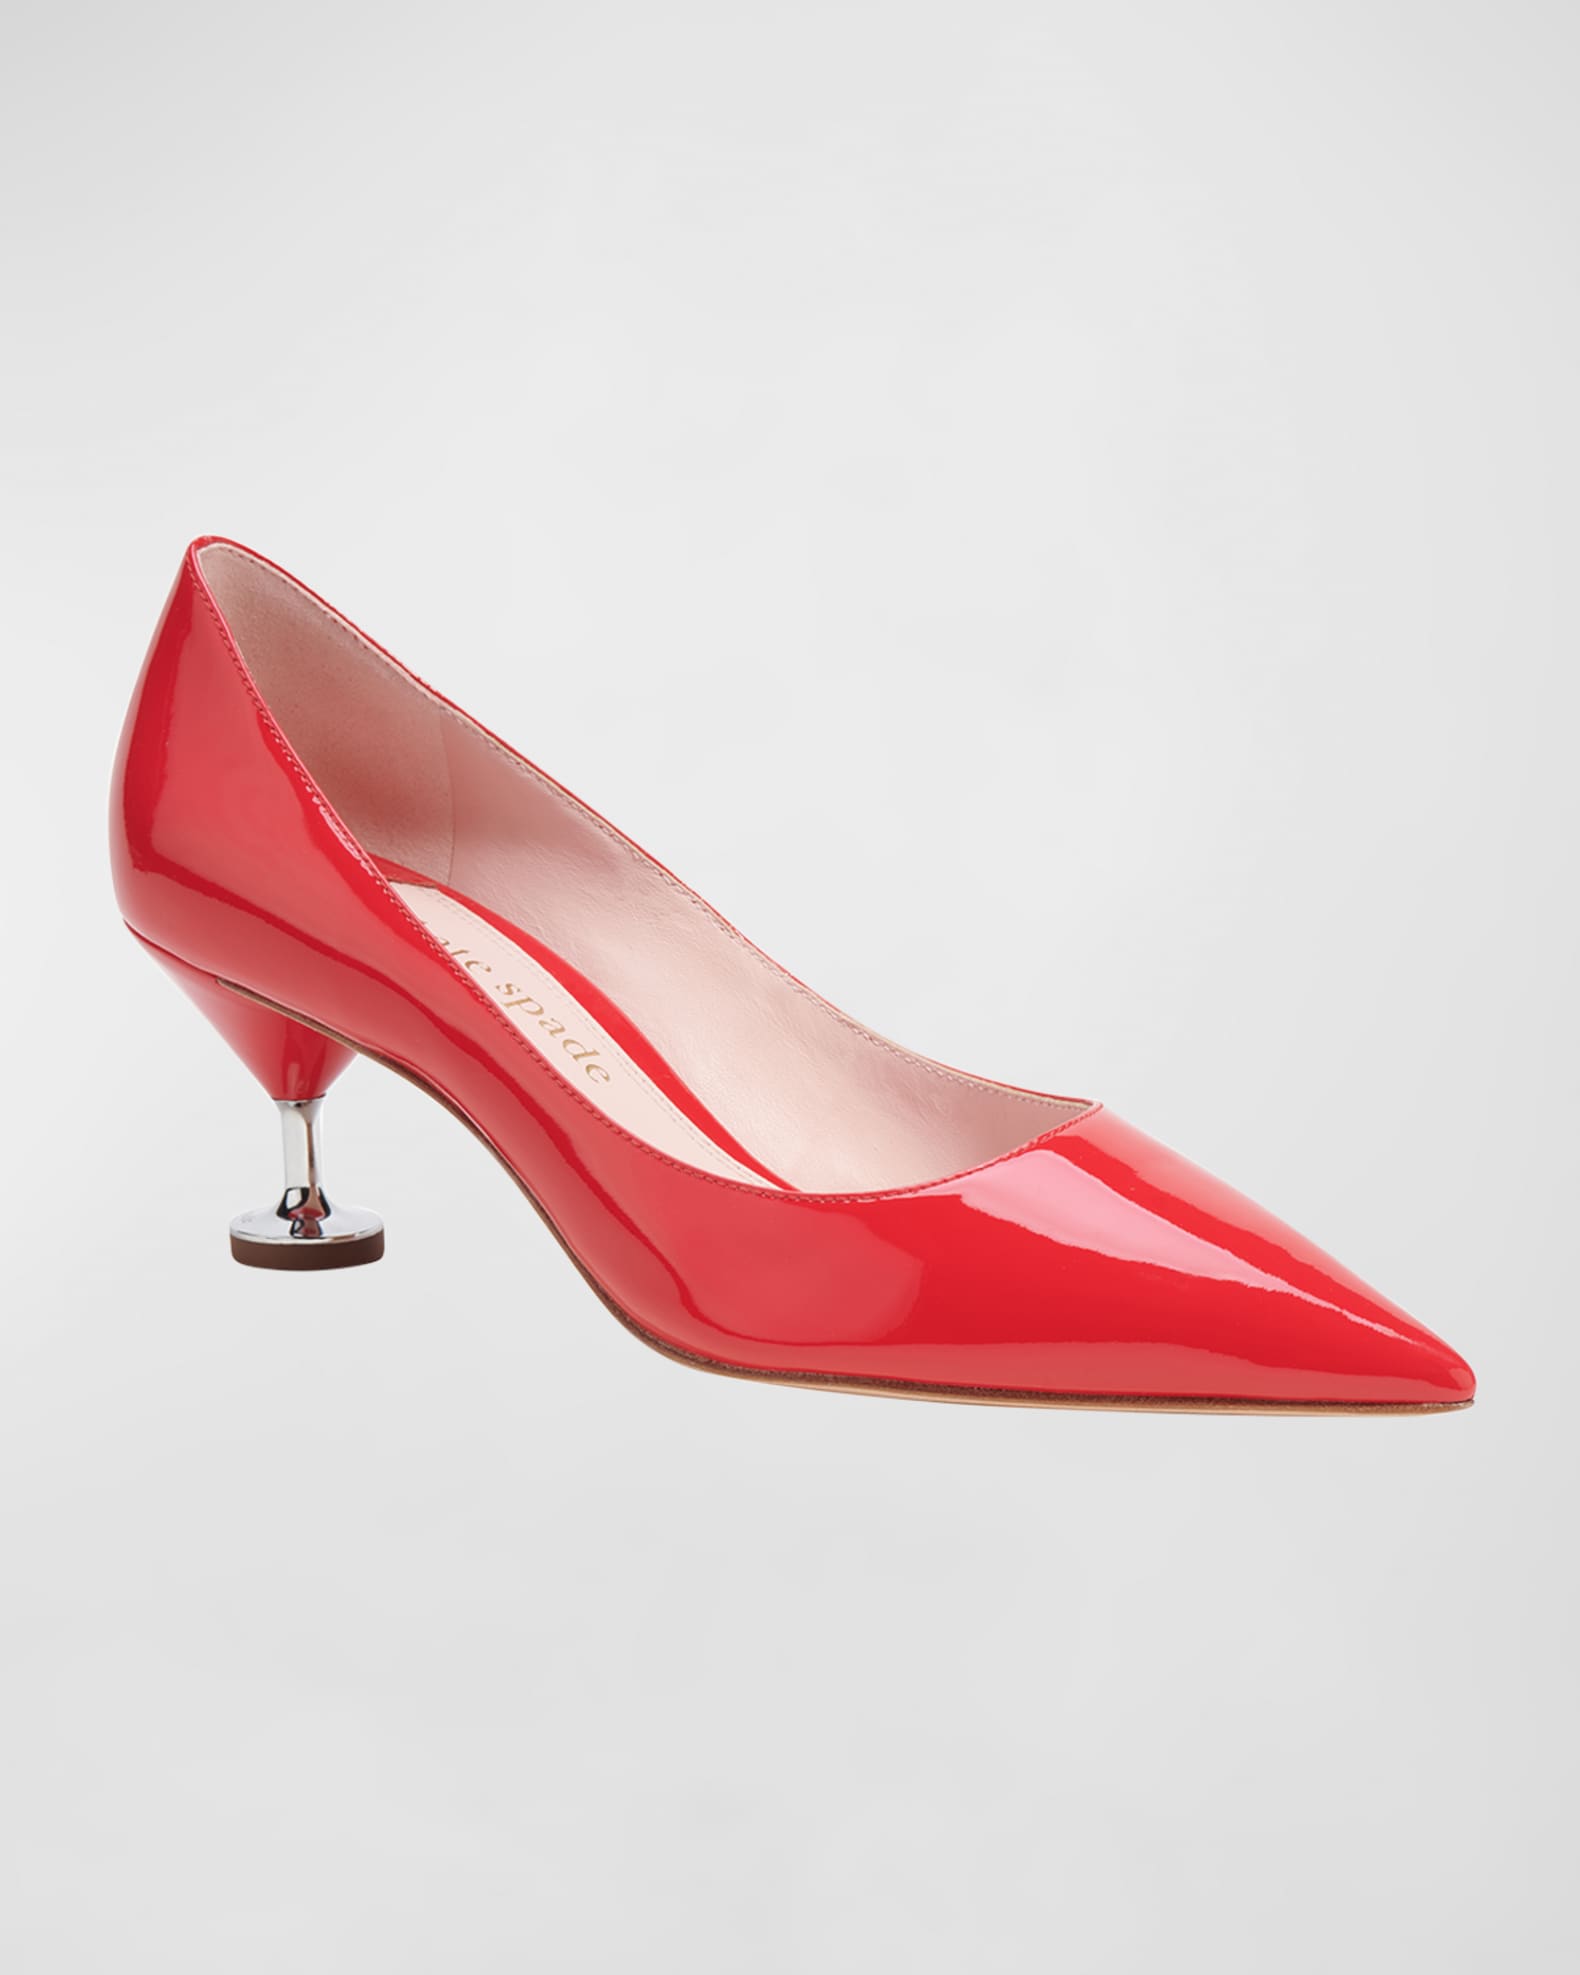 kate spade new york garnish patent kitten-heel pumps | Neiman Marcus